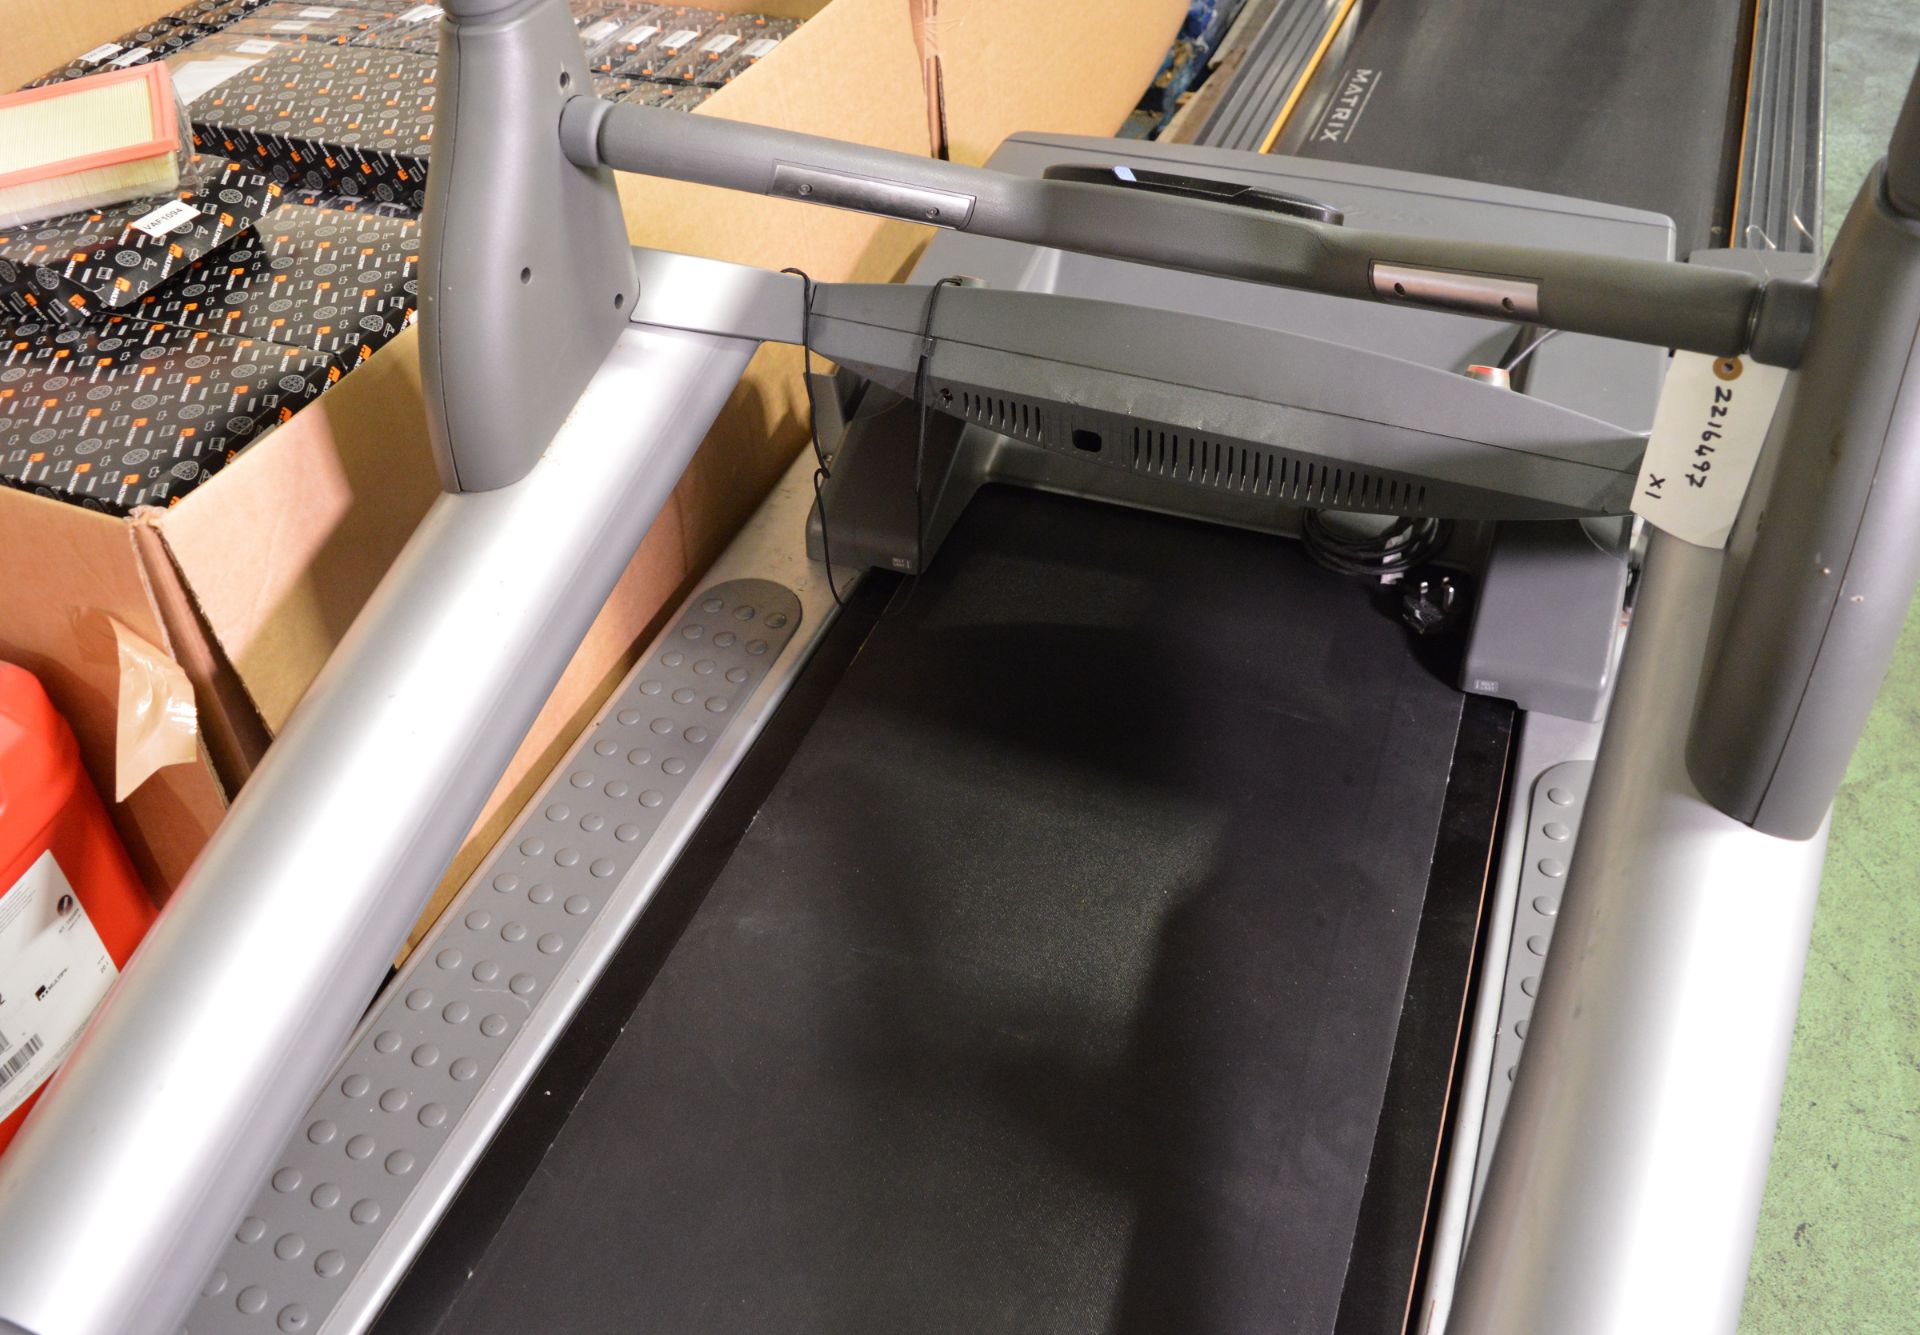 Life Fitness Flex deck shock absorption treadmill - dissassembled - Image 5 of 7